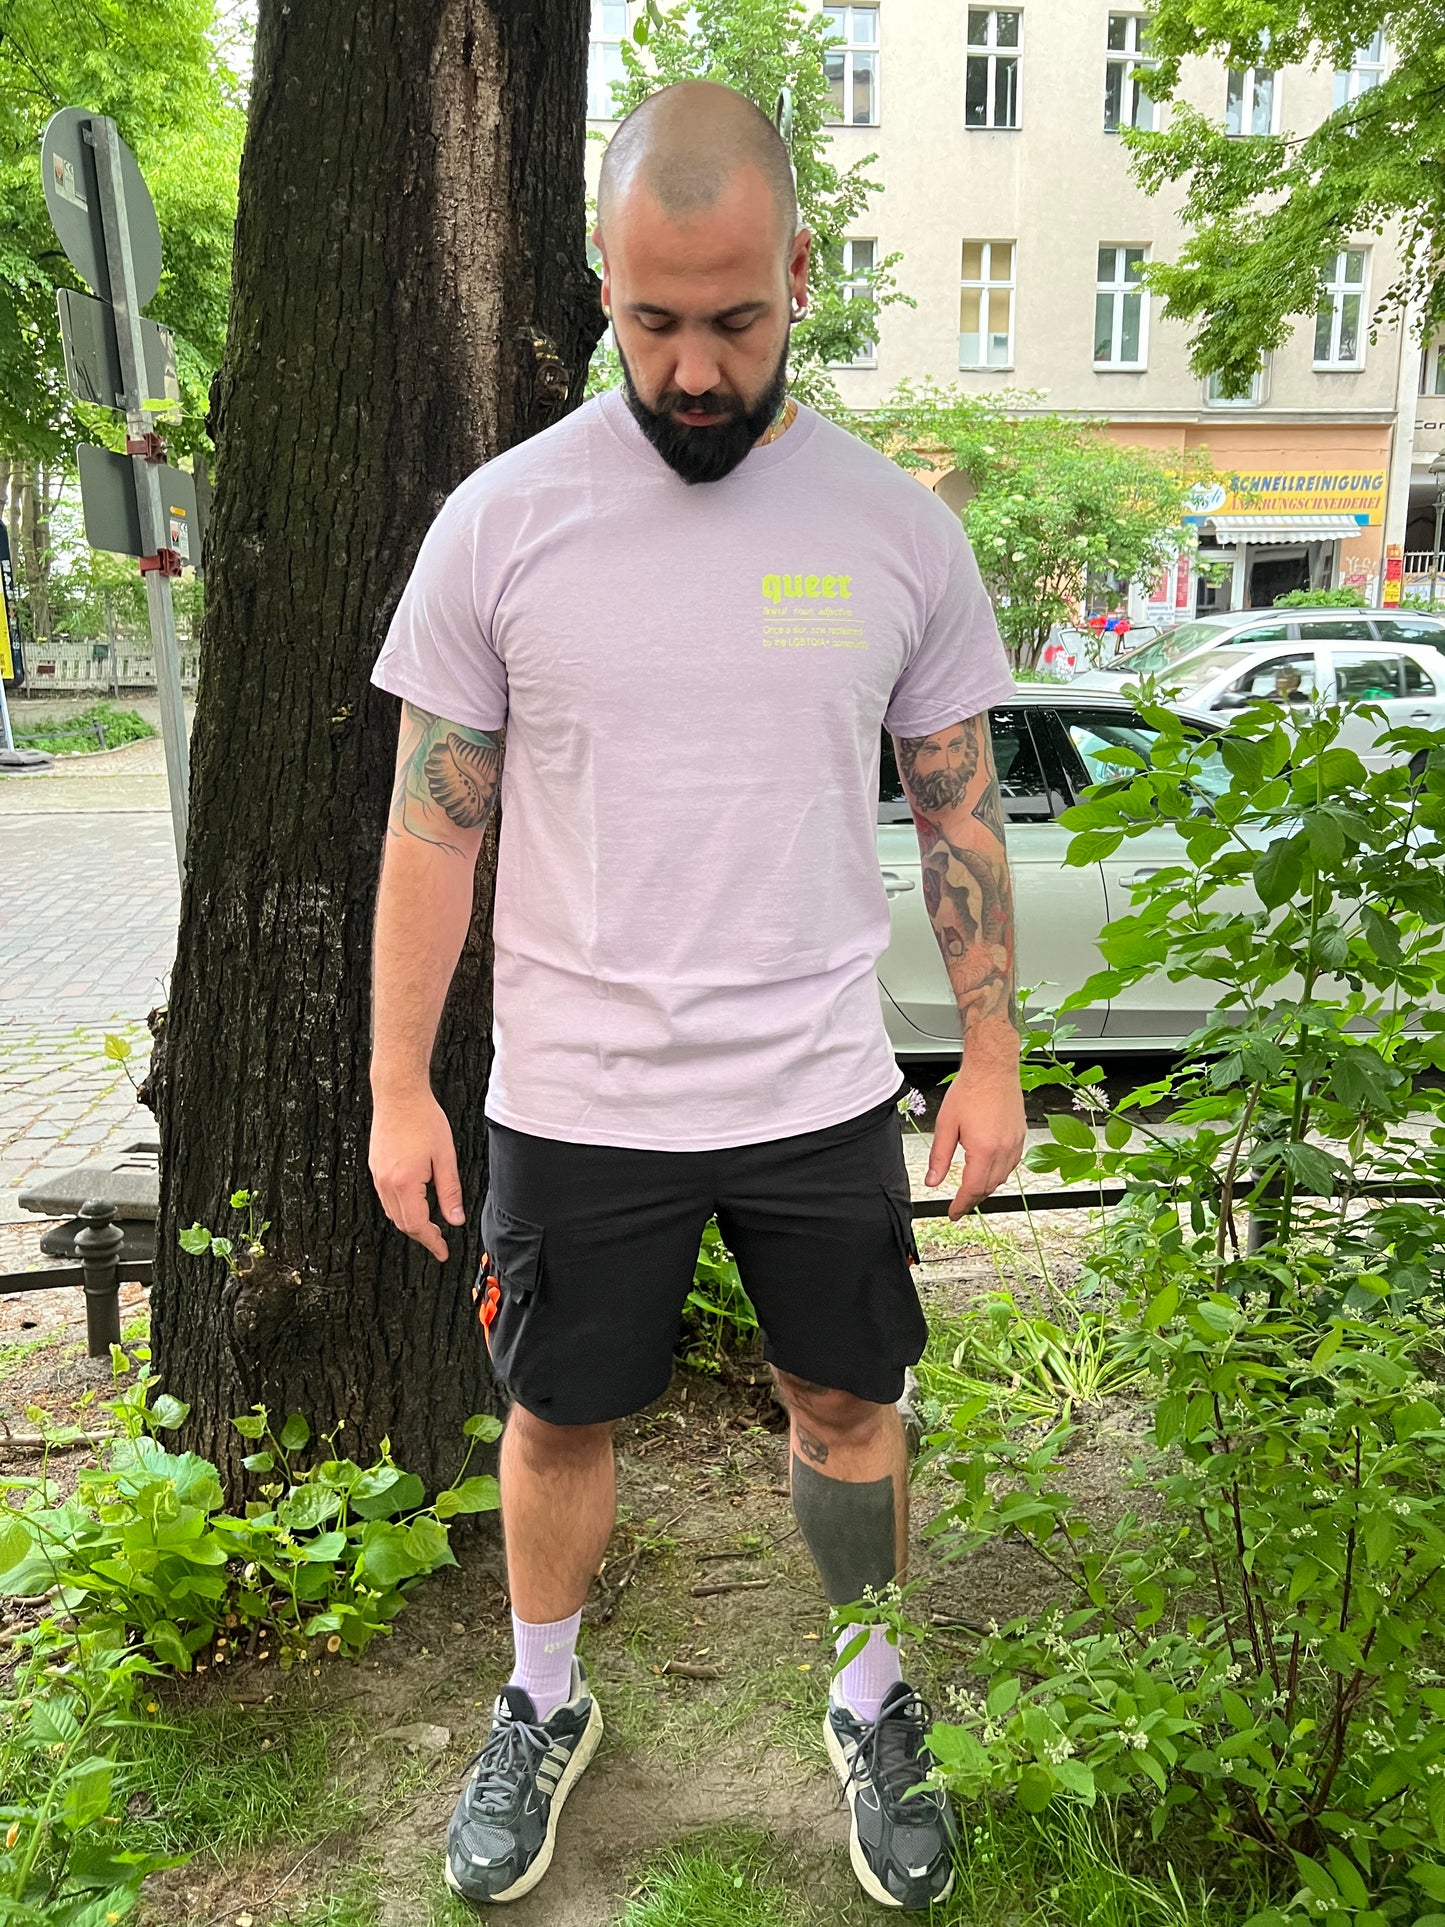 QUEER Keller Kreuzberg T-shirt lilac/lime (Wide CUT)